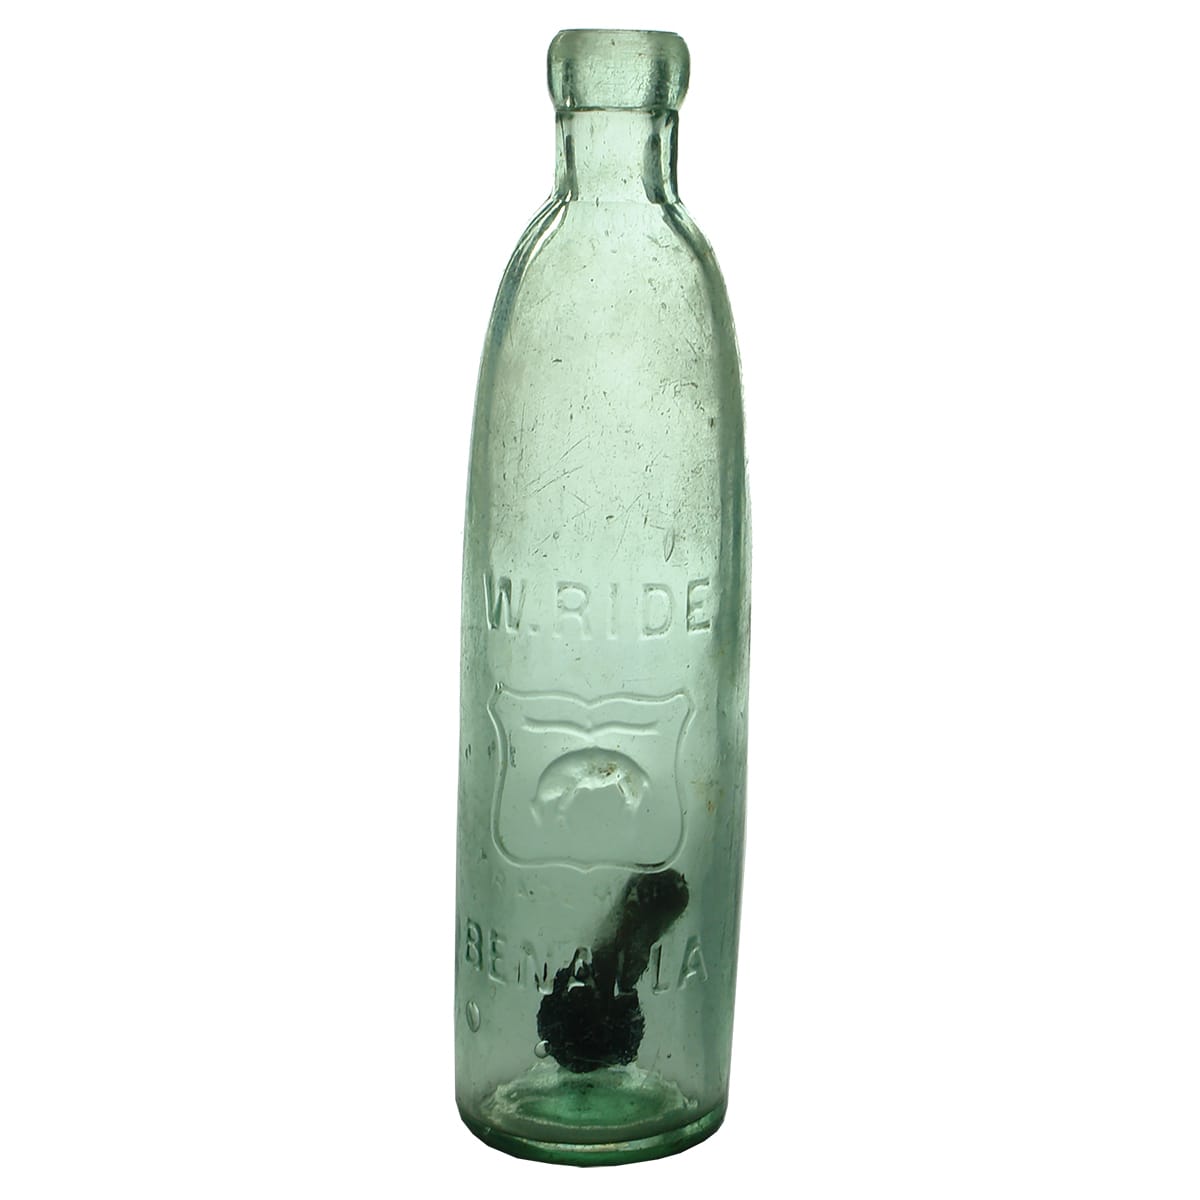 Hogben Patent Stick Bottle. W. Ride, Benalla. Aqua. 10 oz. (Victoria)